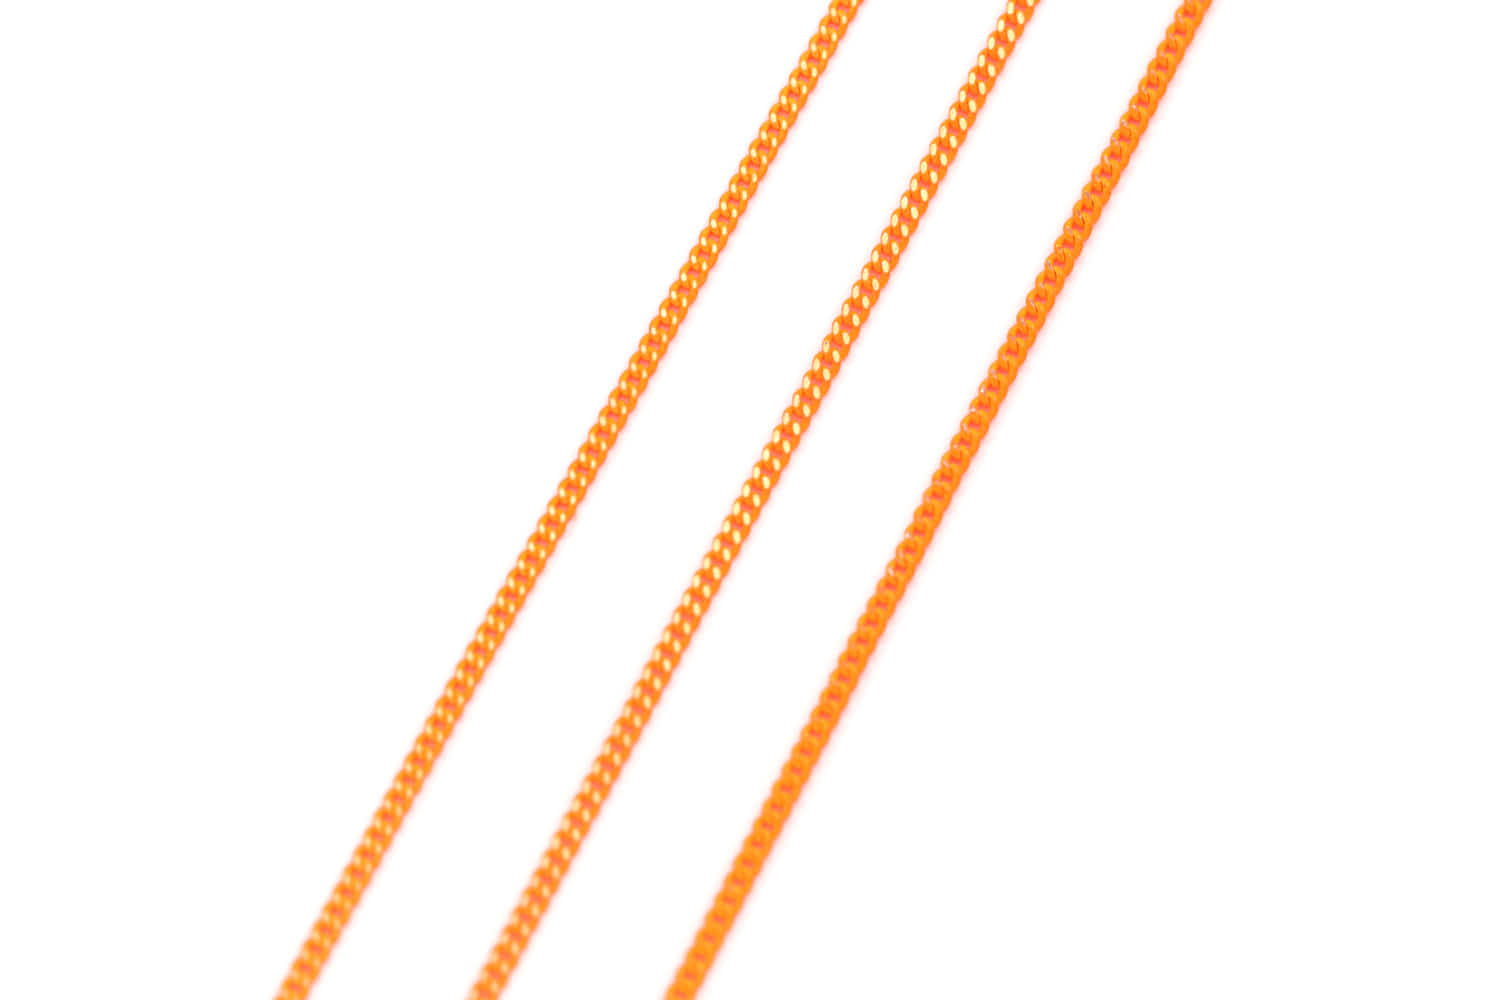 [CJ45-08]Neon chain, 1m, 1.6mm thick, Neon orange color coated chain, Colorful chain, Dainty chain